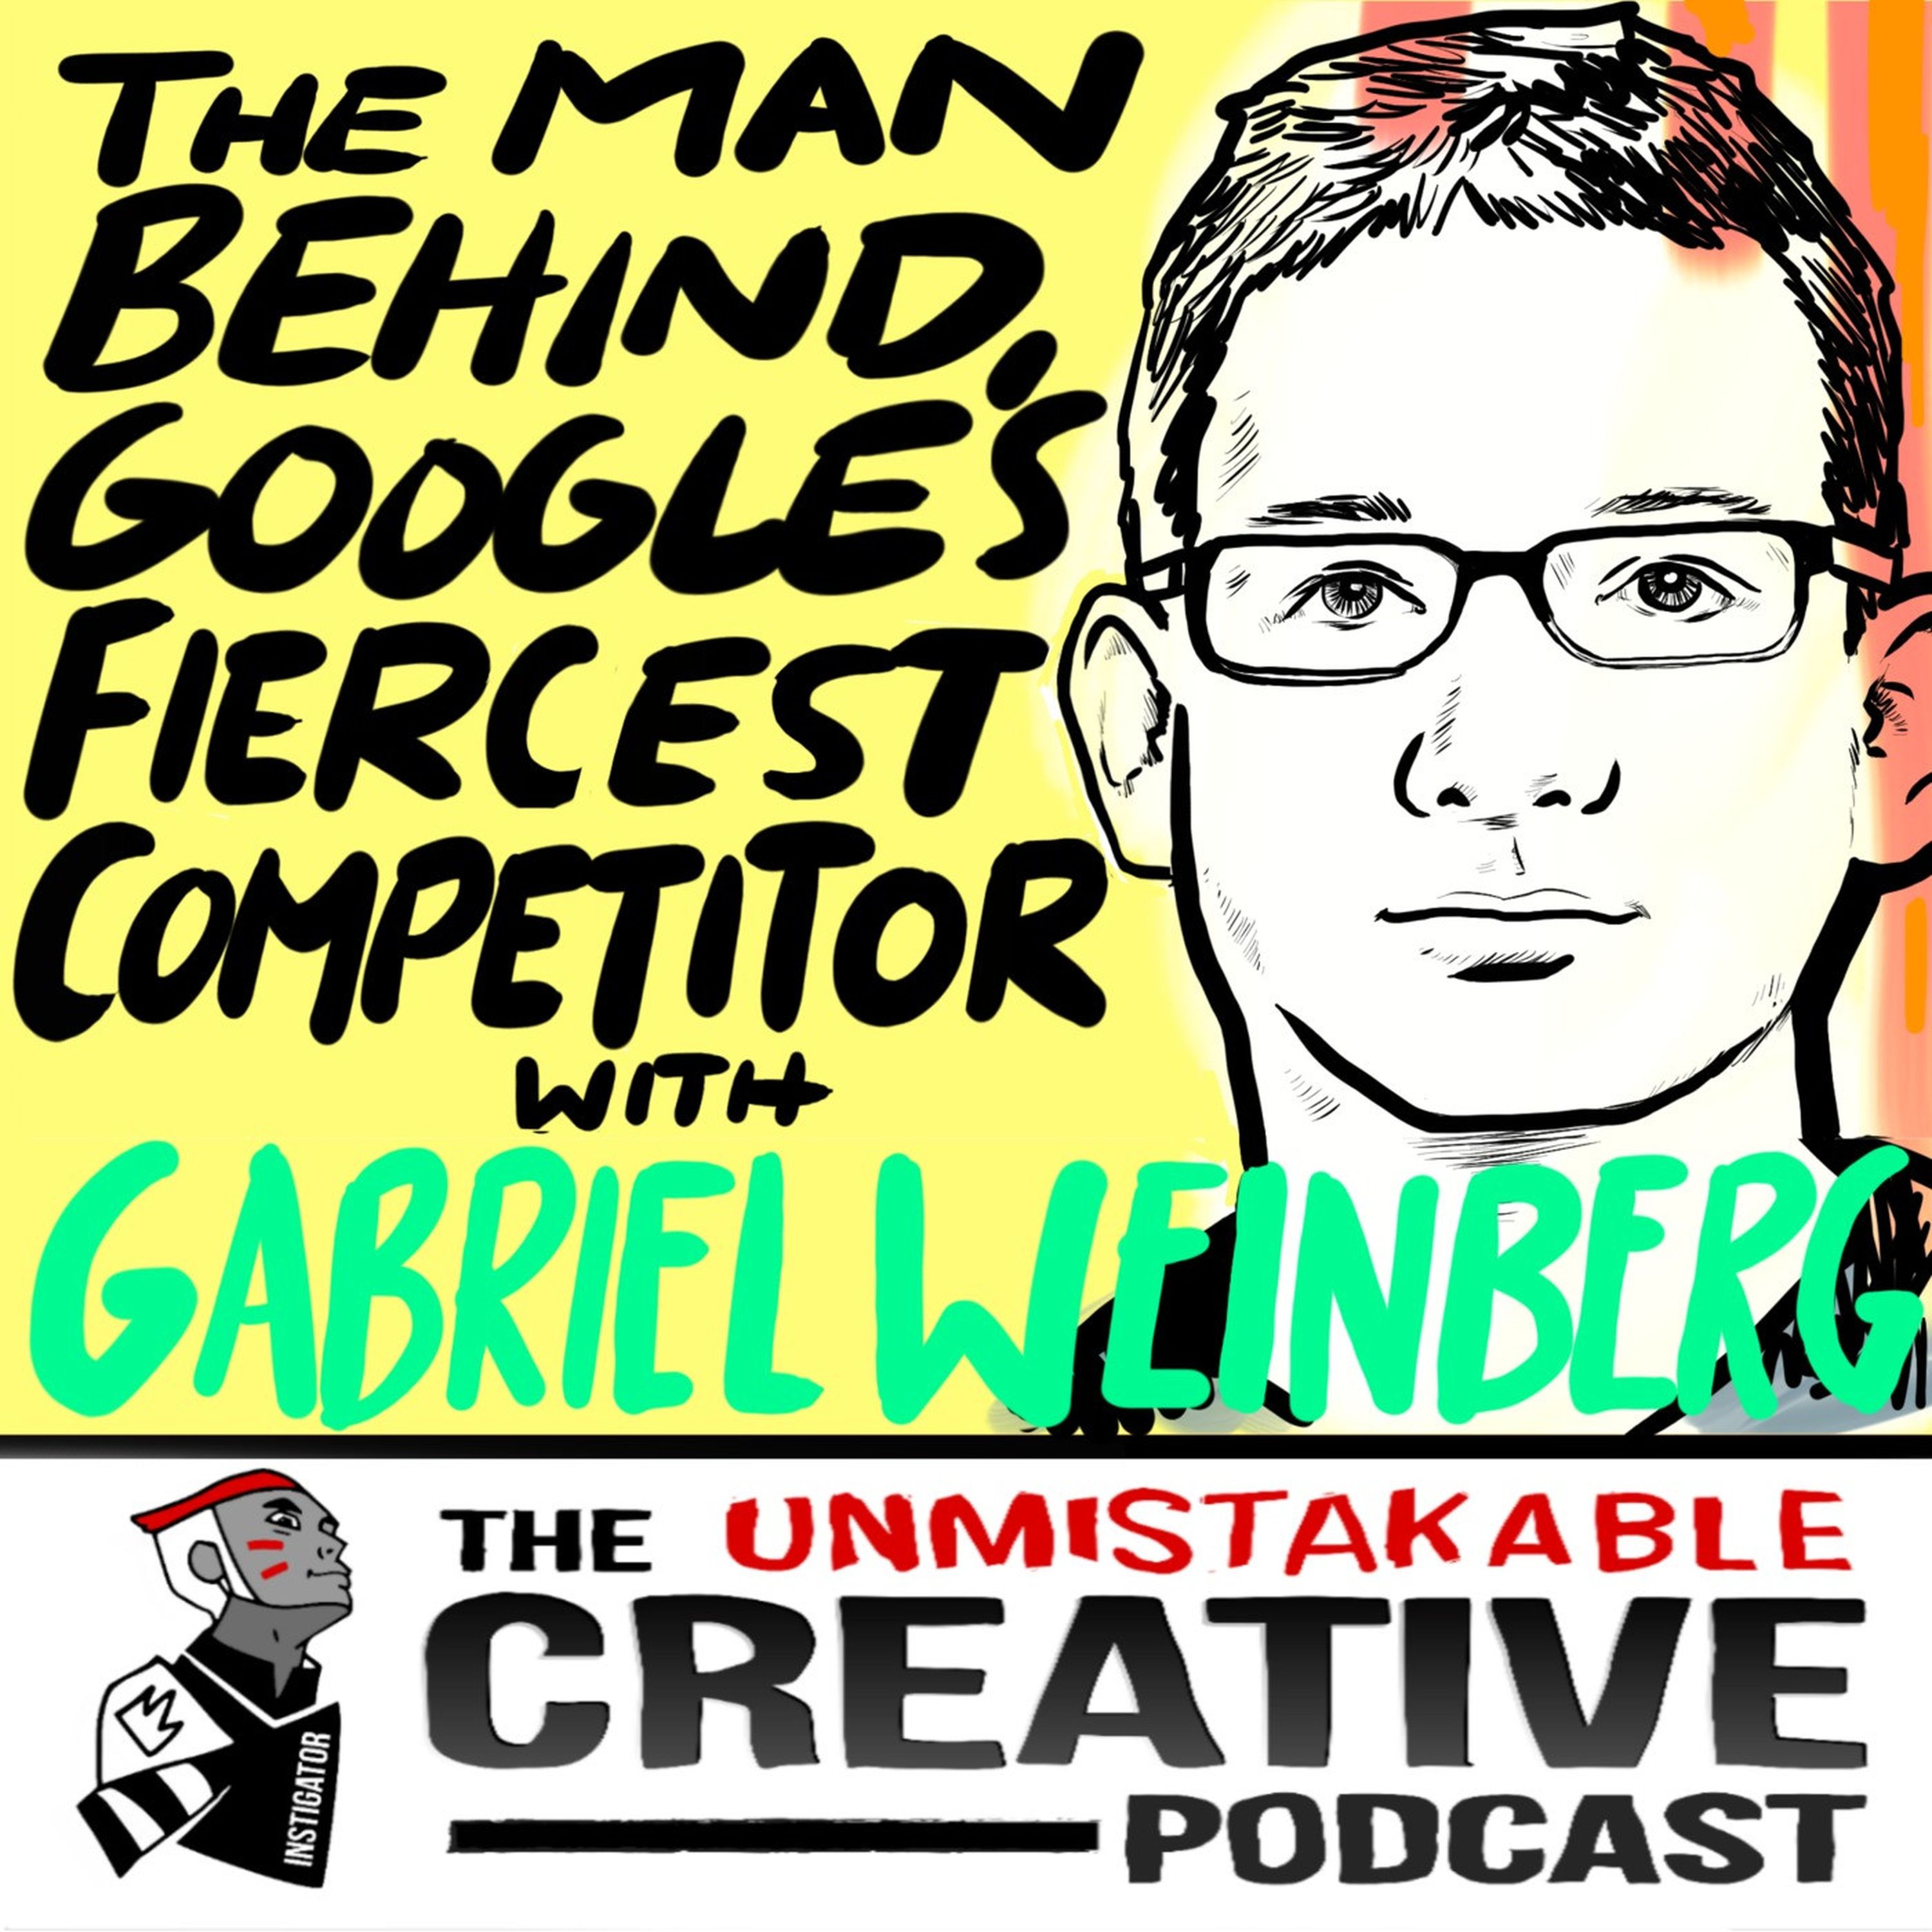 The Man Behind Google’s Fiercest Competitor With Gabriel Weinberg